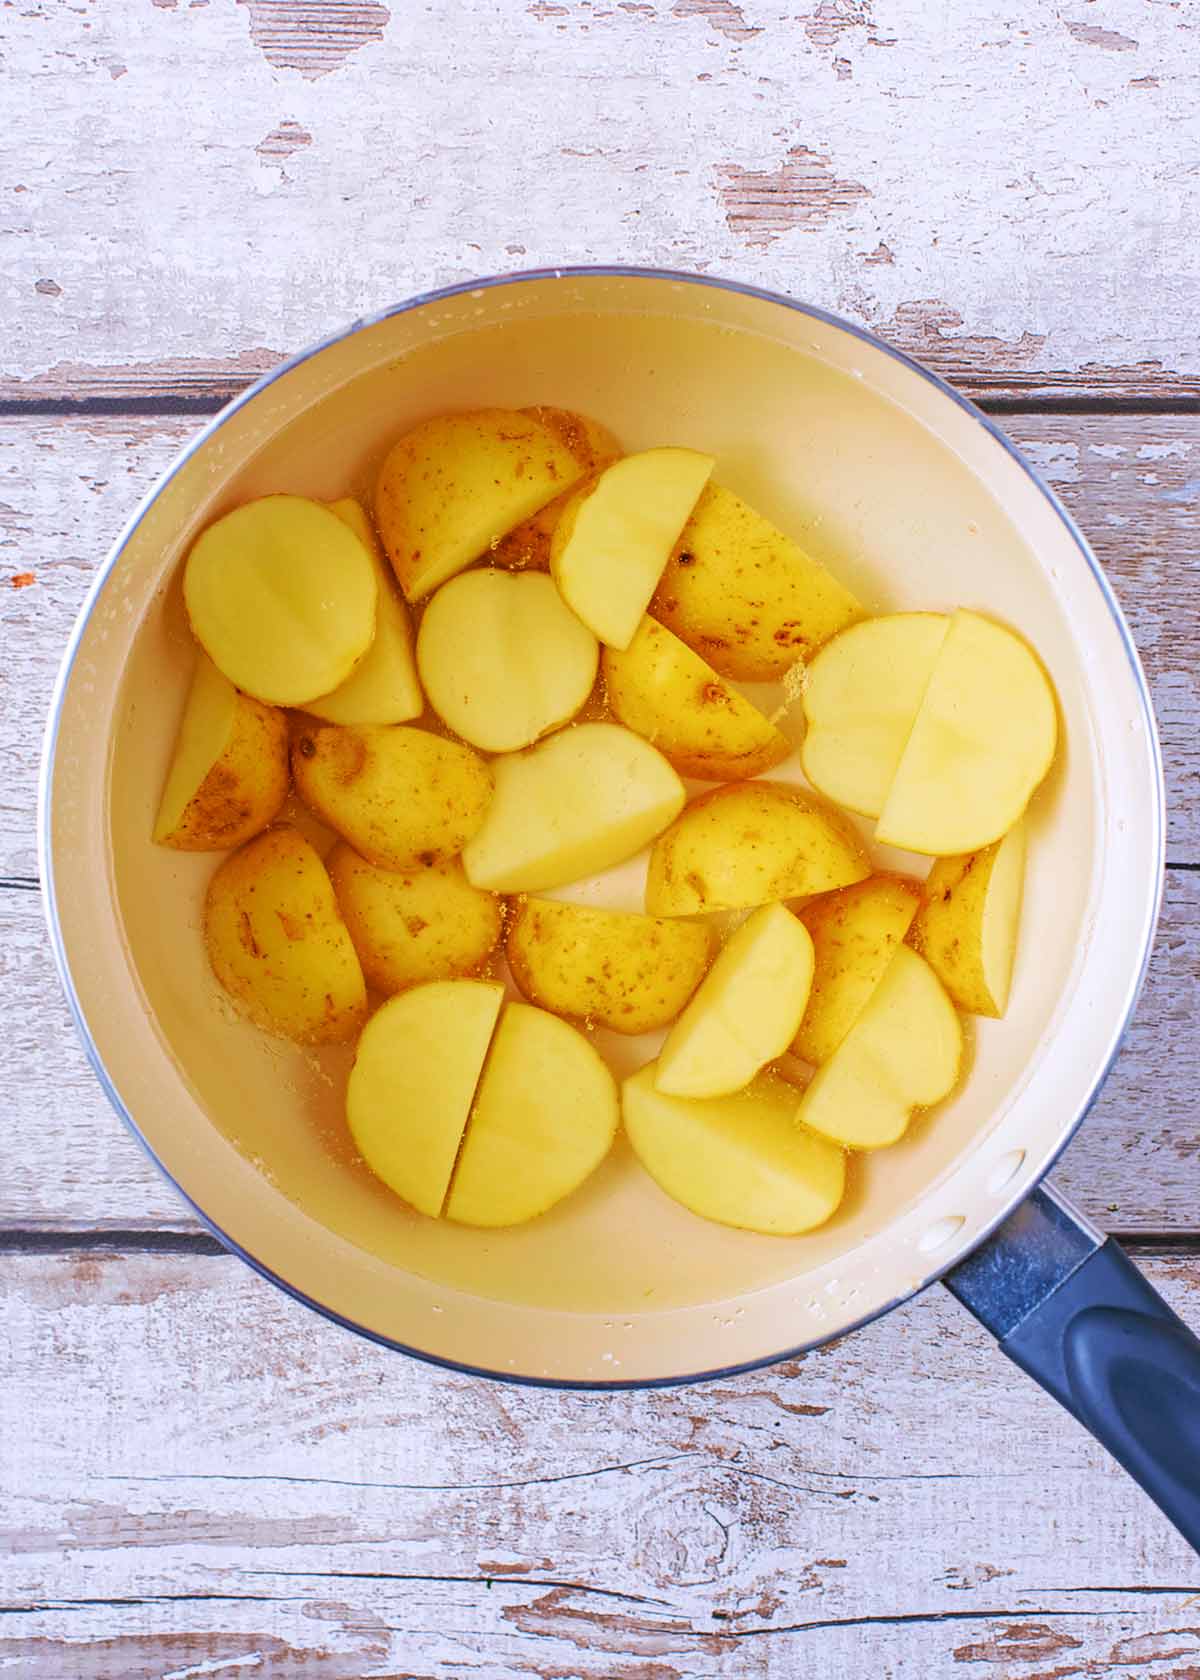 A saucepan containing baby potatoes cut in half.